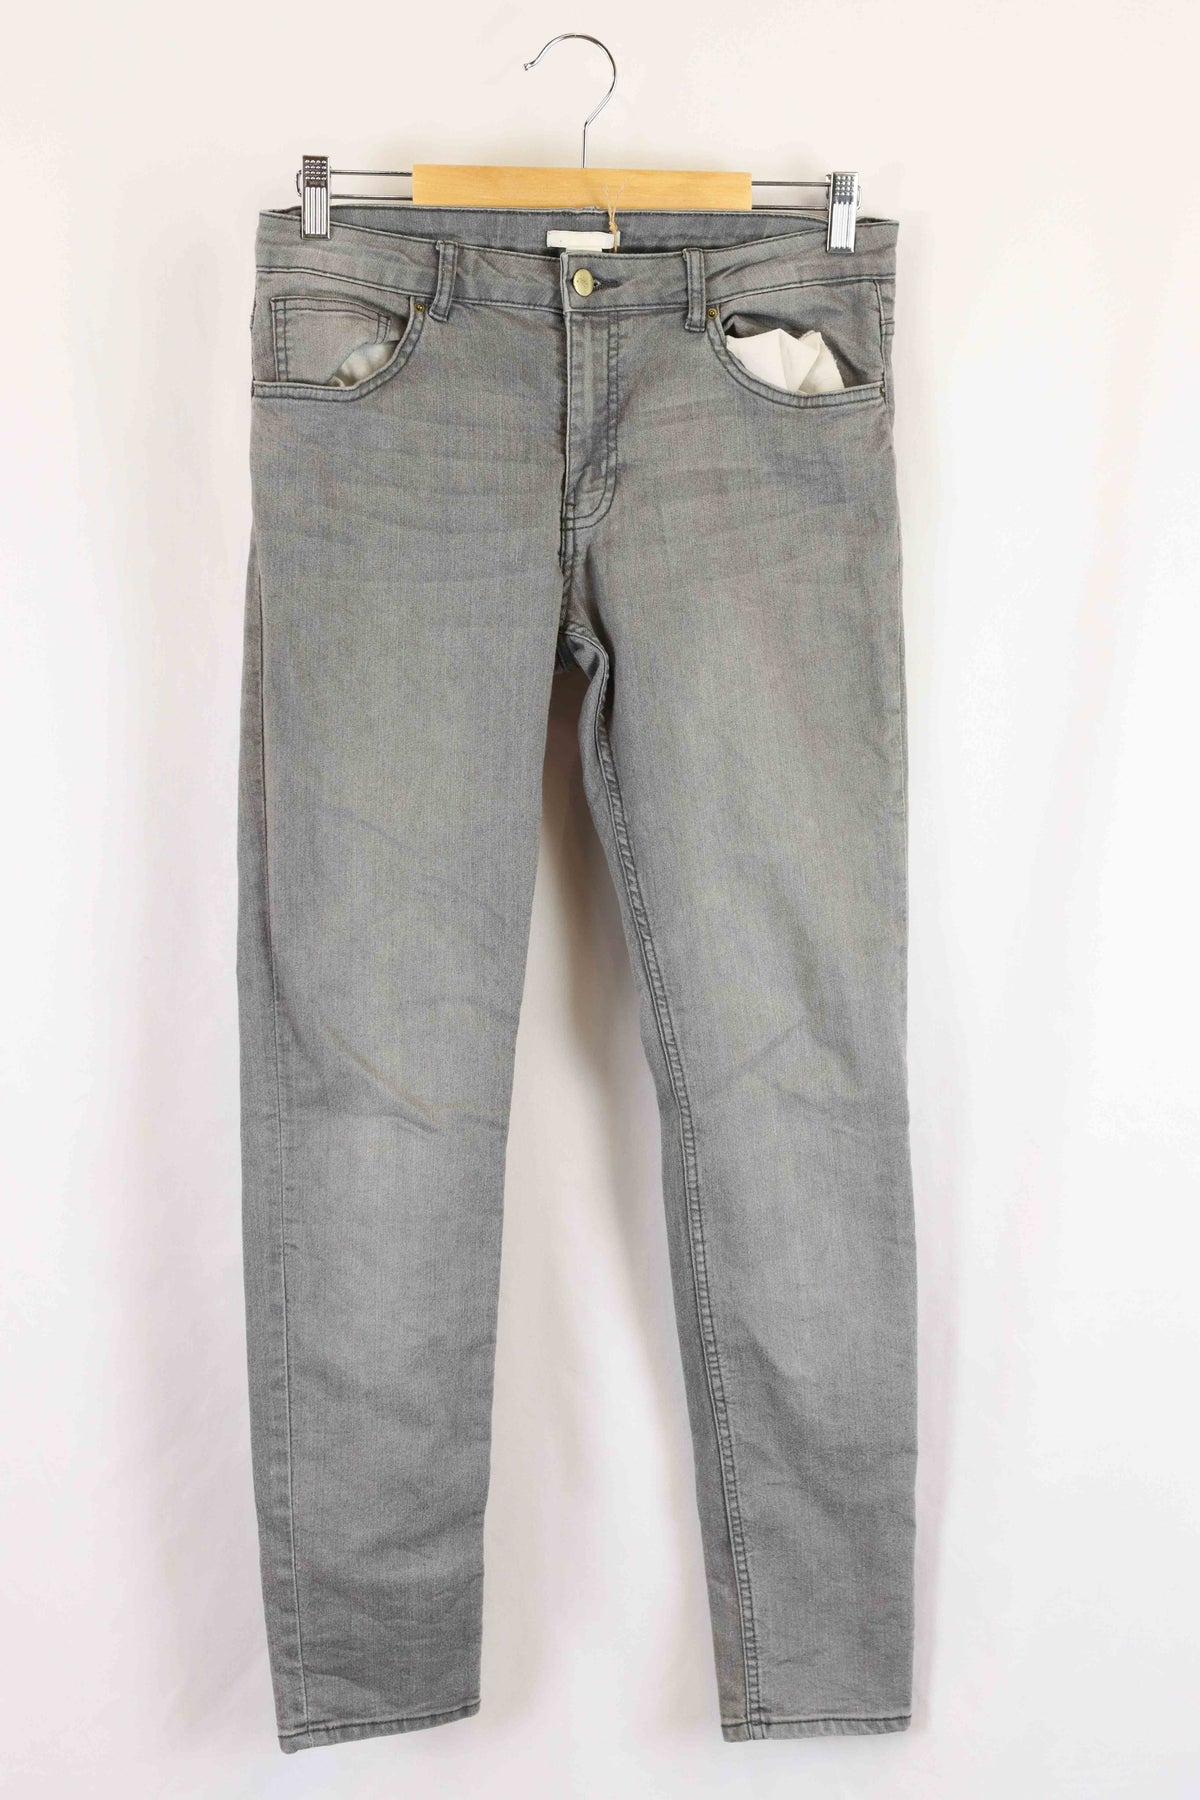 H&amp;M Grey Denim Skinny Jeans 10